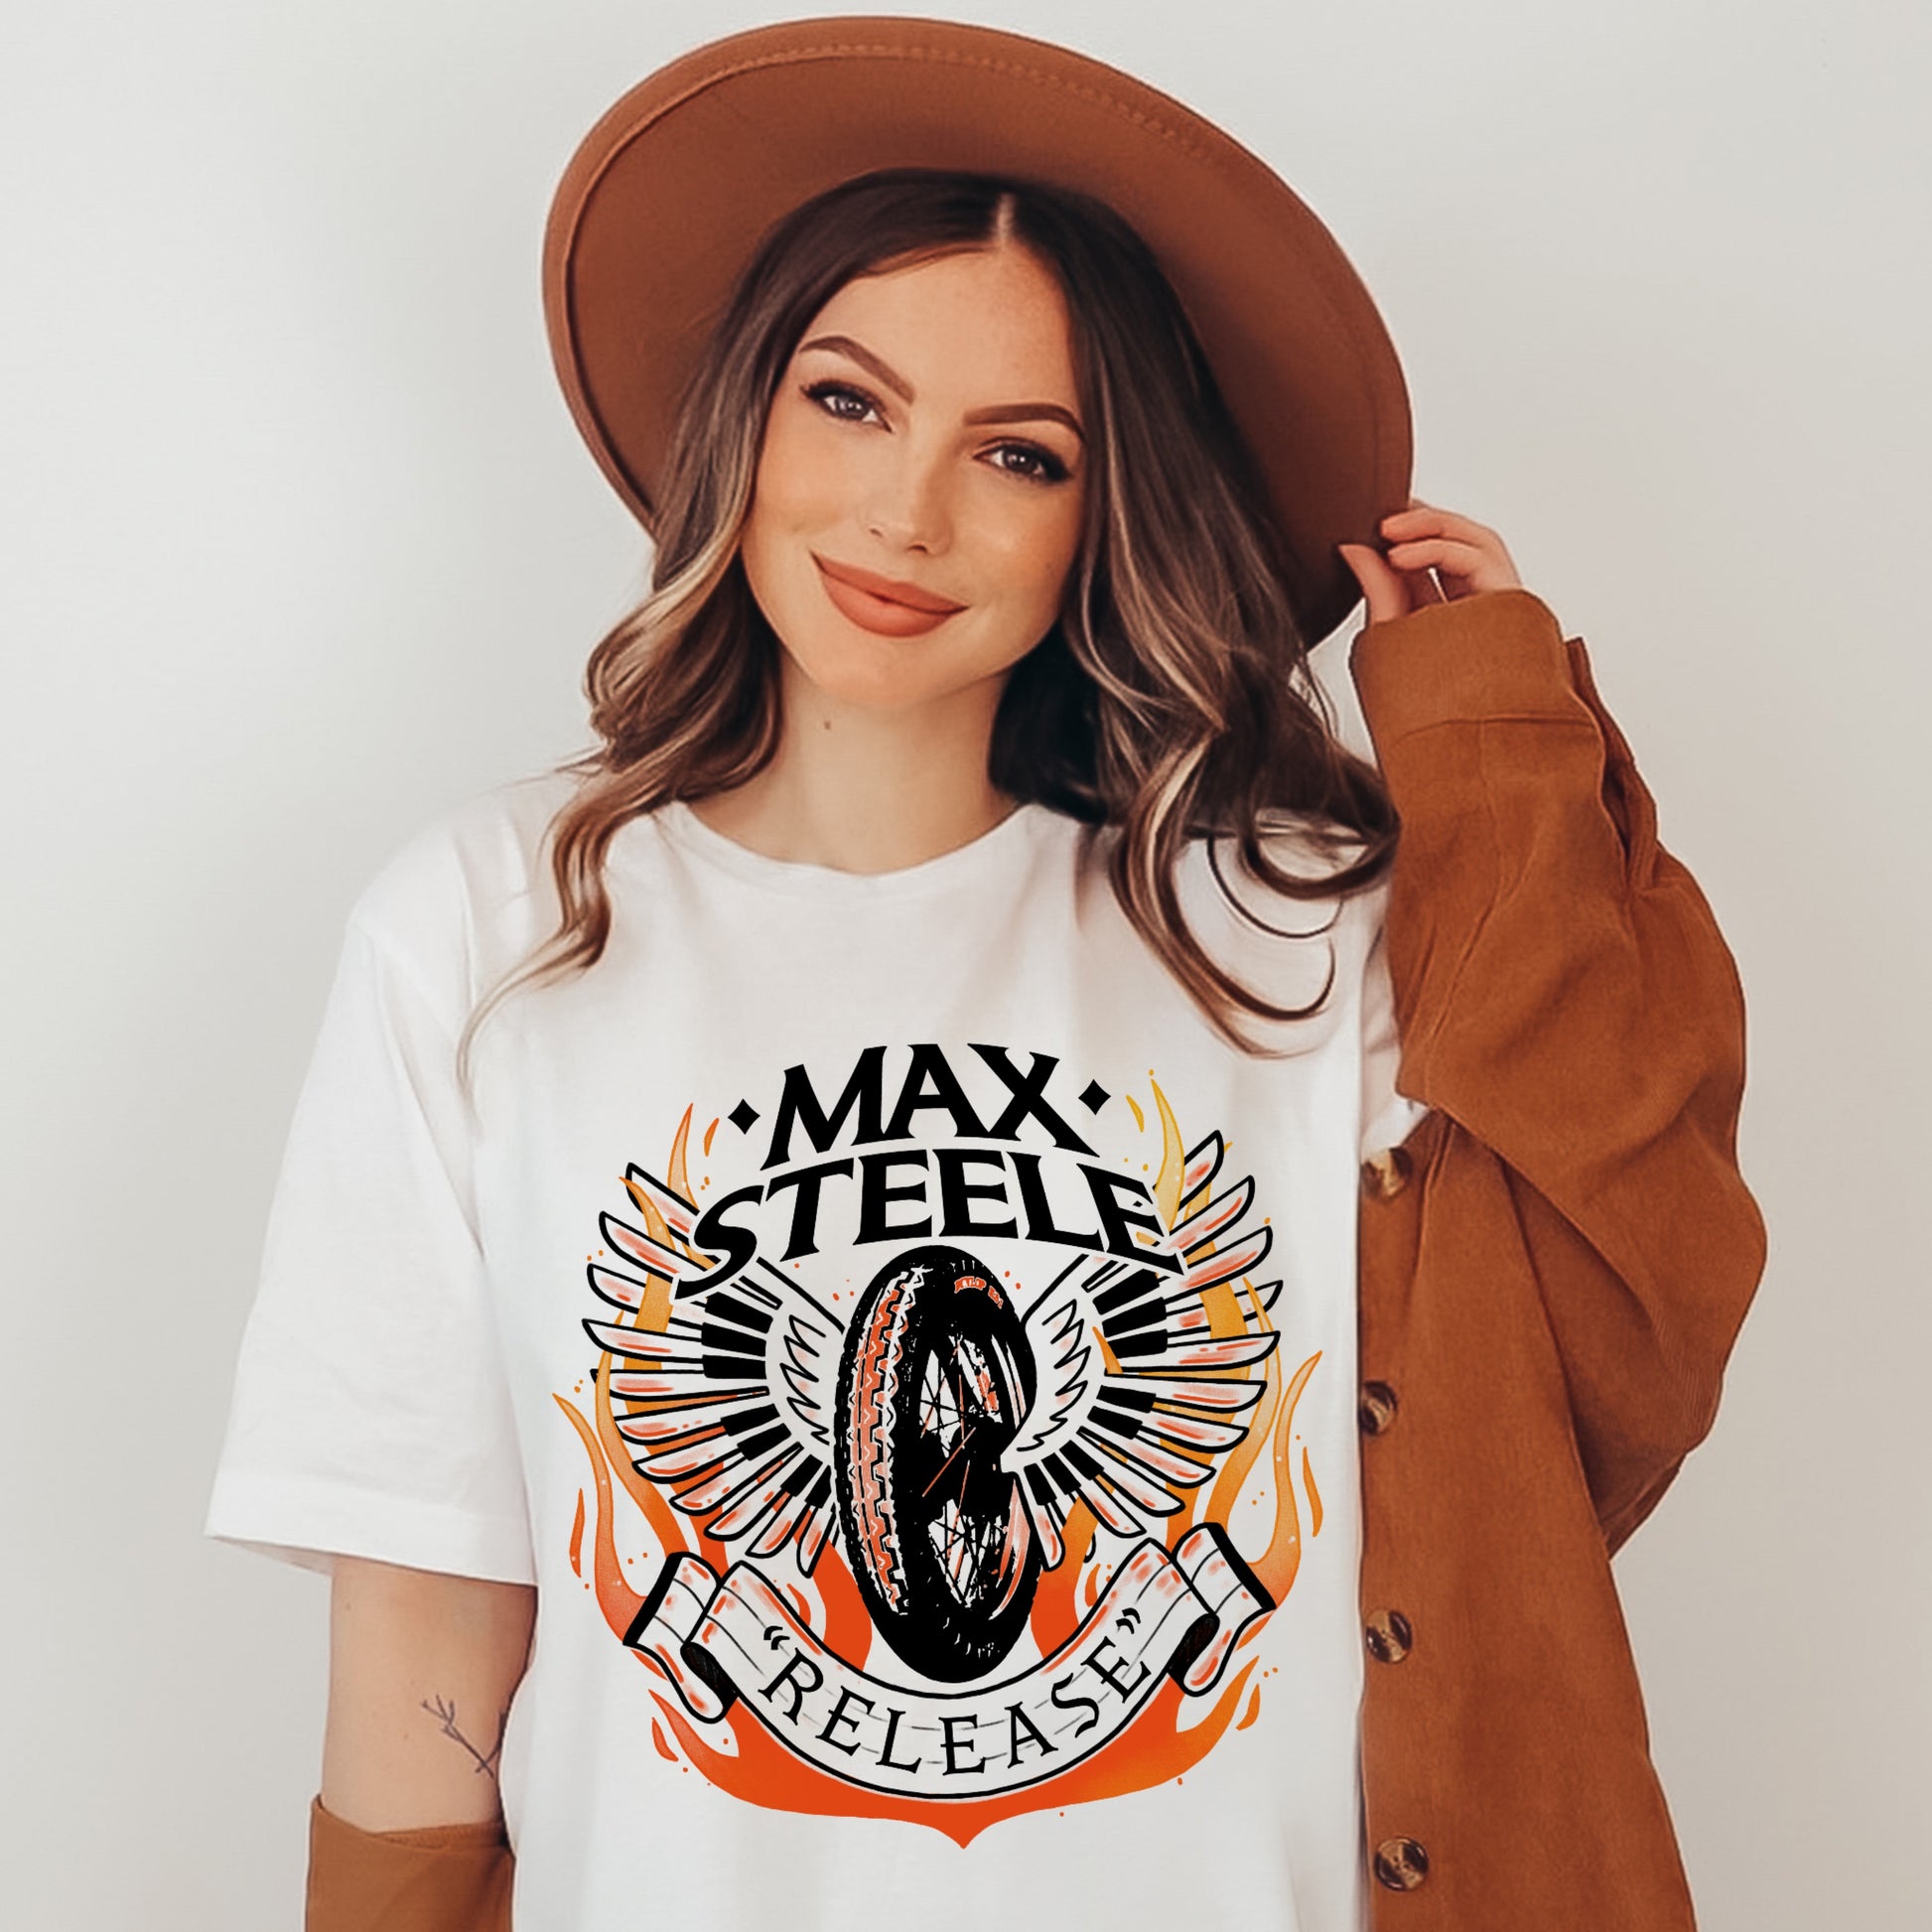 Max Steele Shirt | Madison Kate Merch